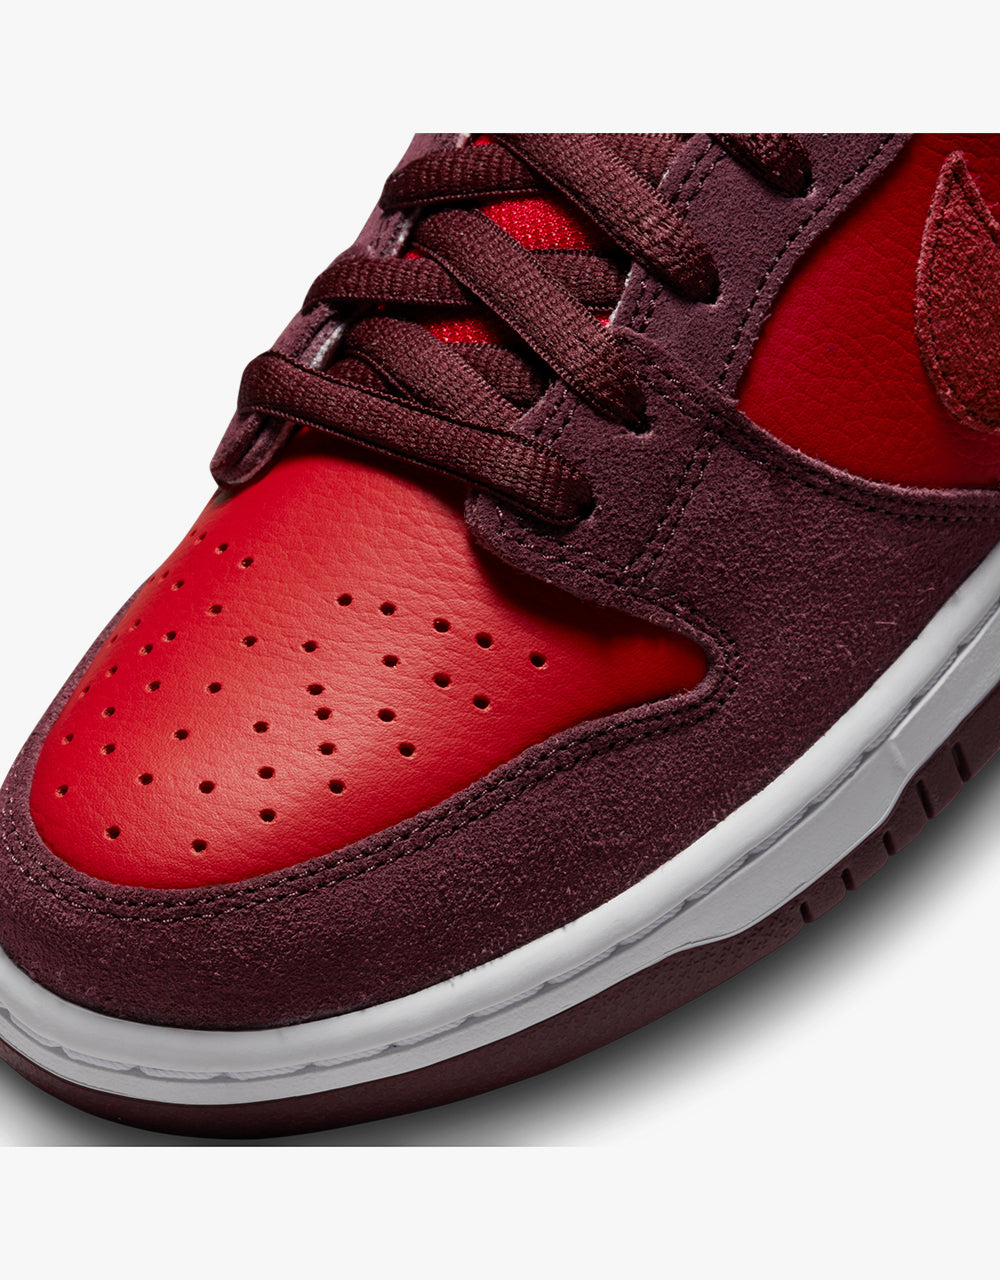 Nike SB 'Pit Stop Cherry' Dunk Low Pro Skate Shoes